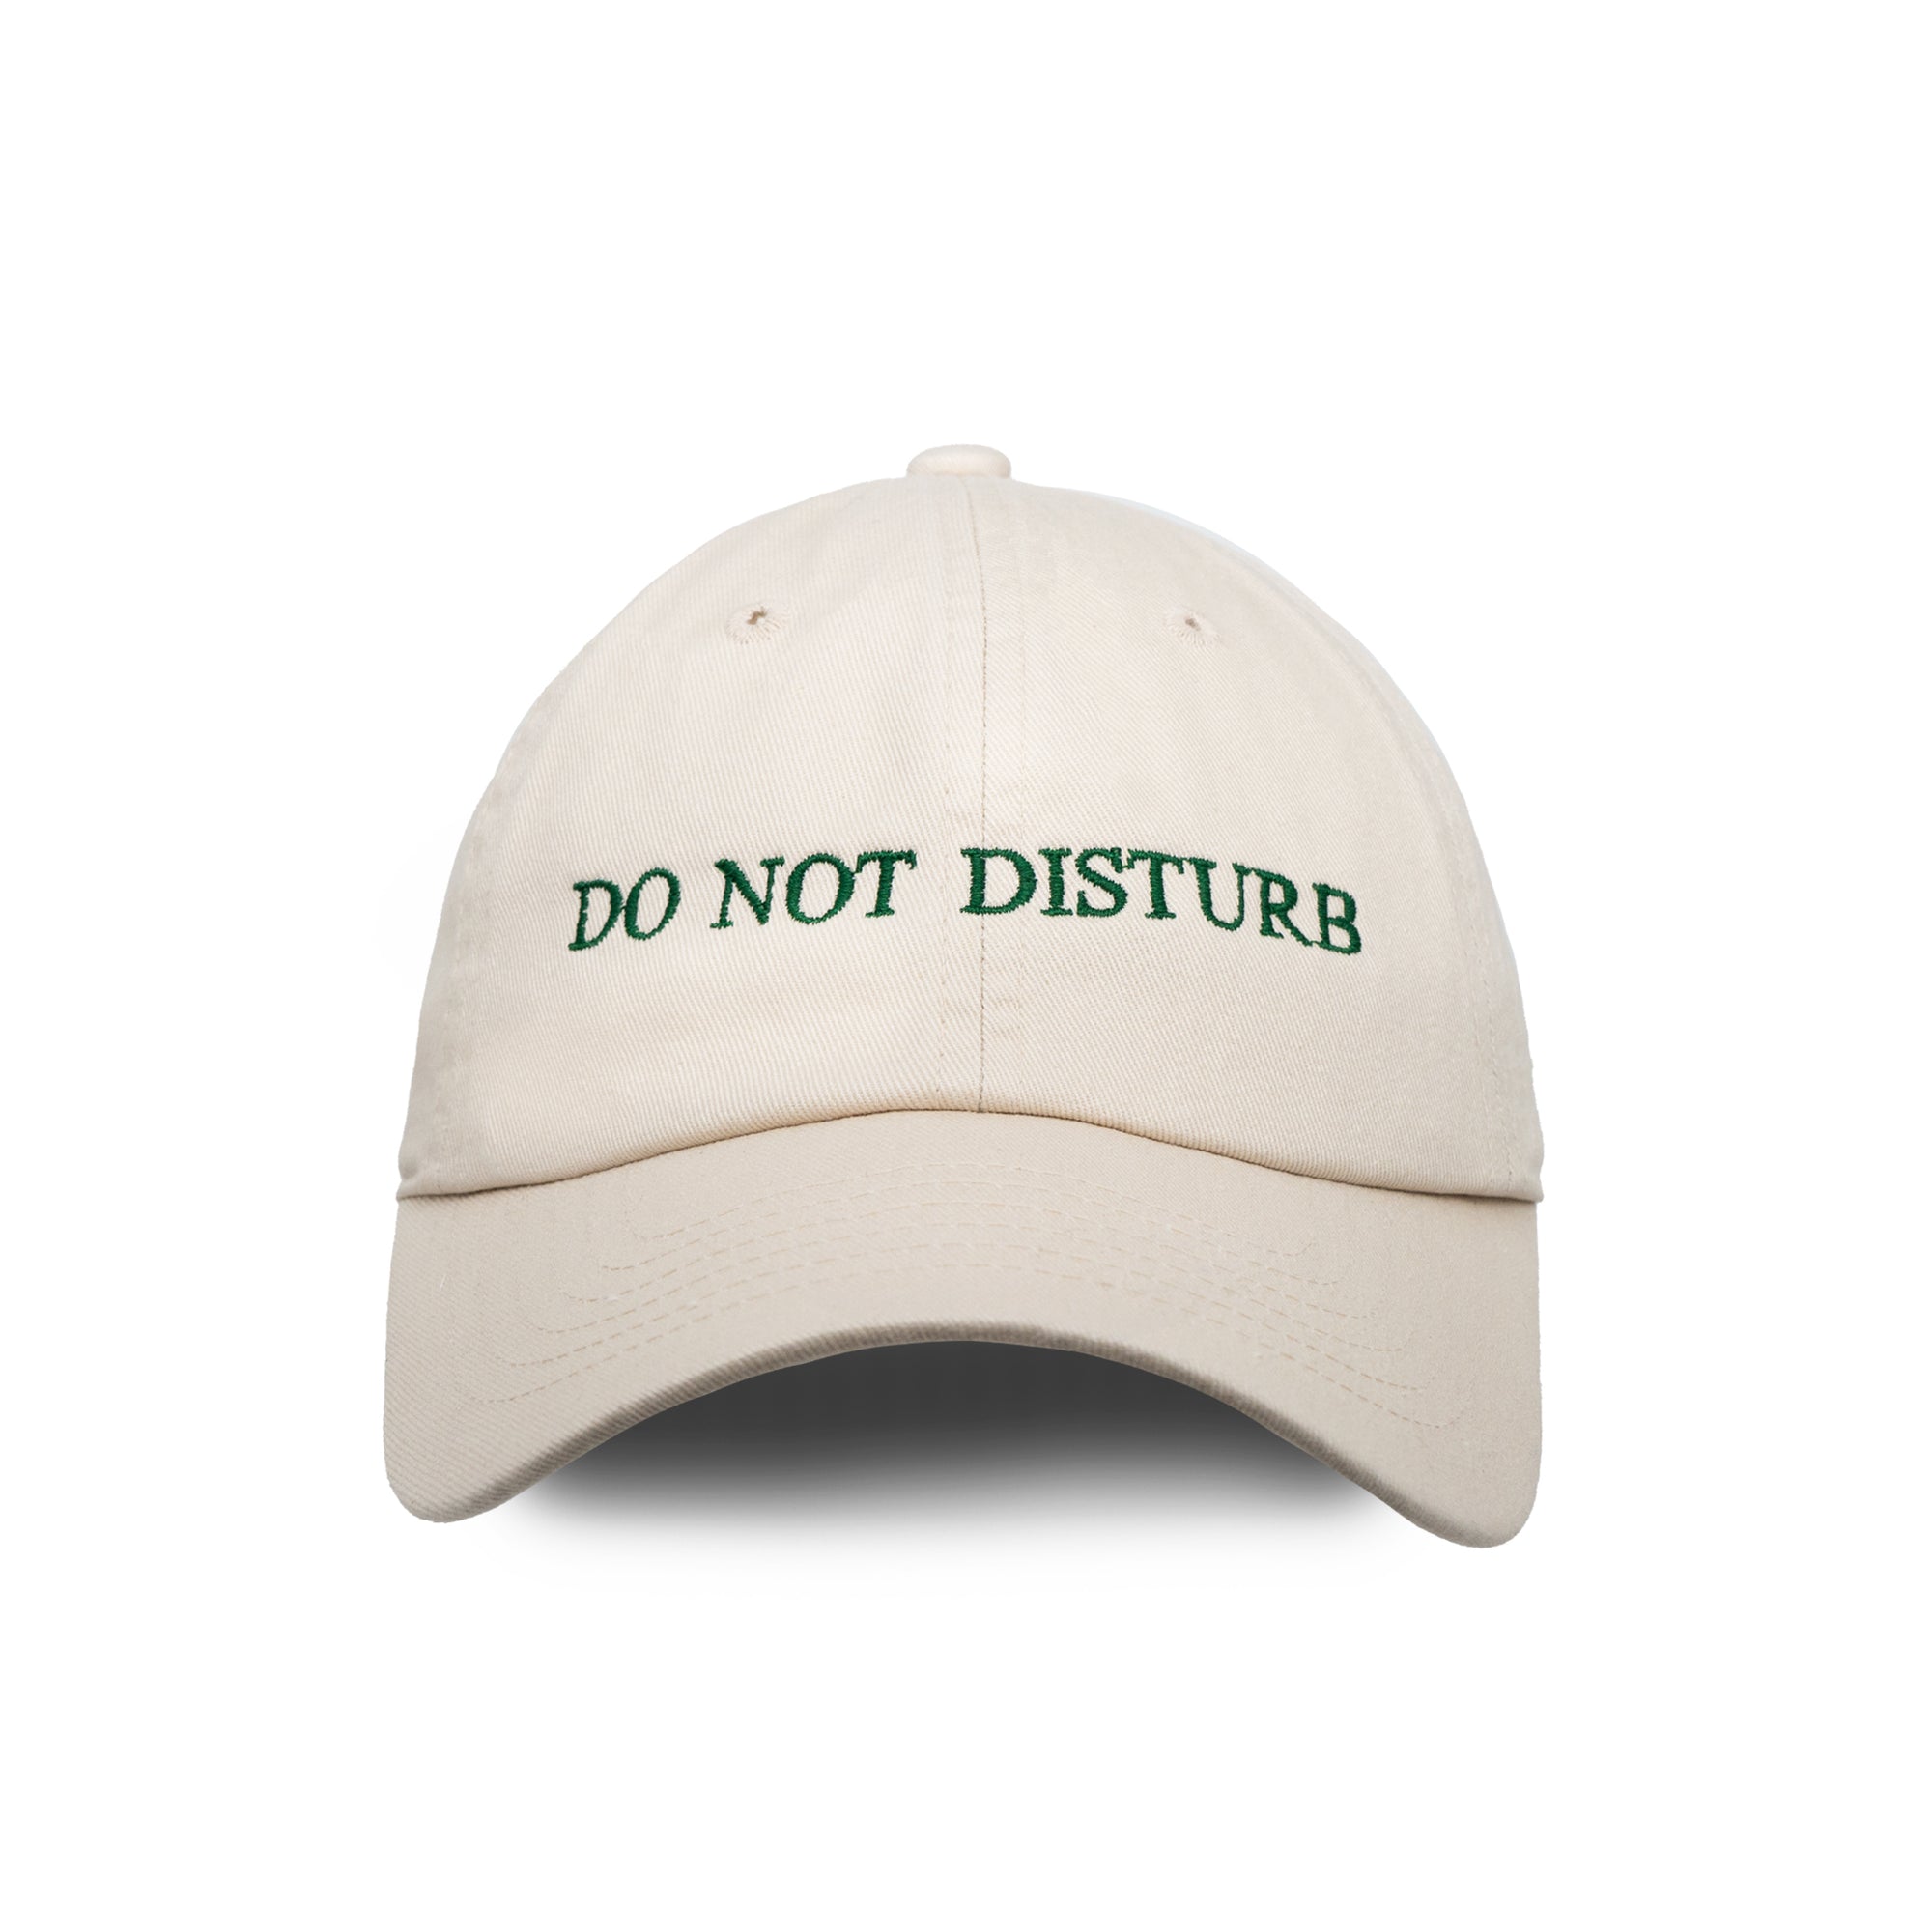 DO NOT DISTURB